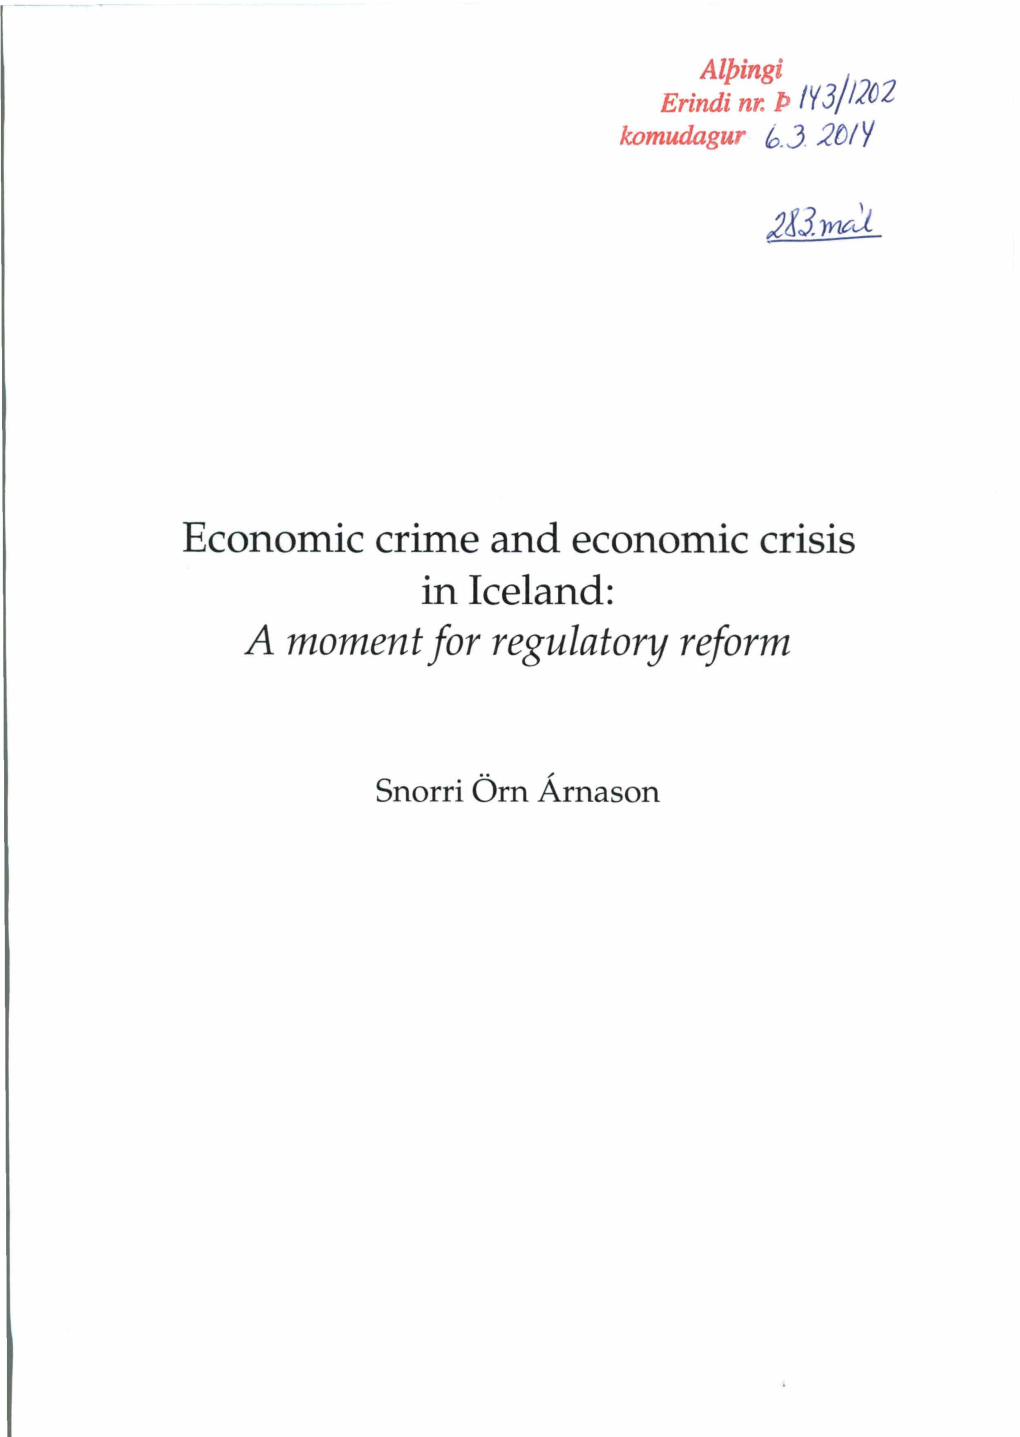 Economic Crime and Economic Crisis in Iceland: a Momentfor Regulatory Reform